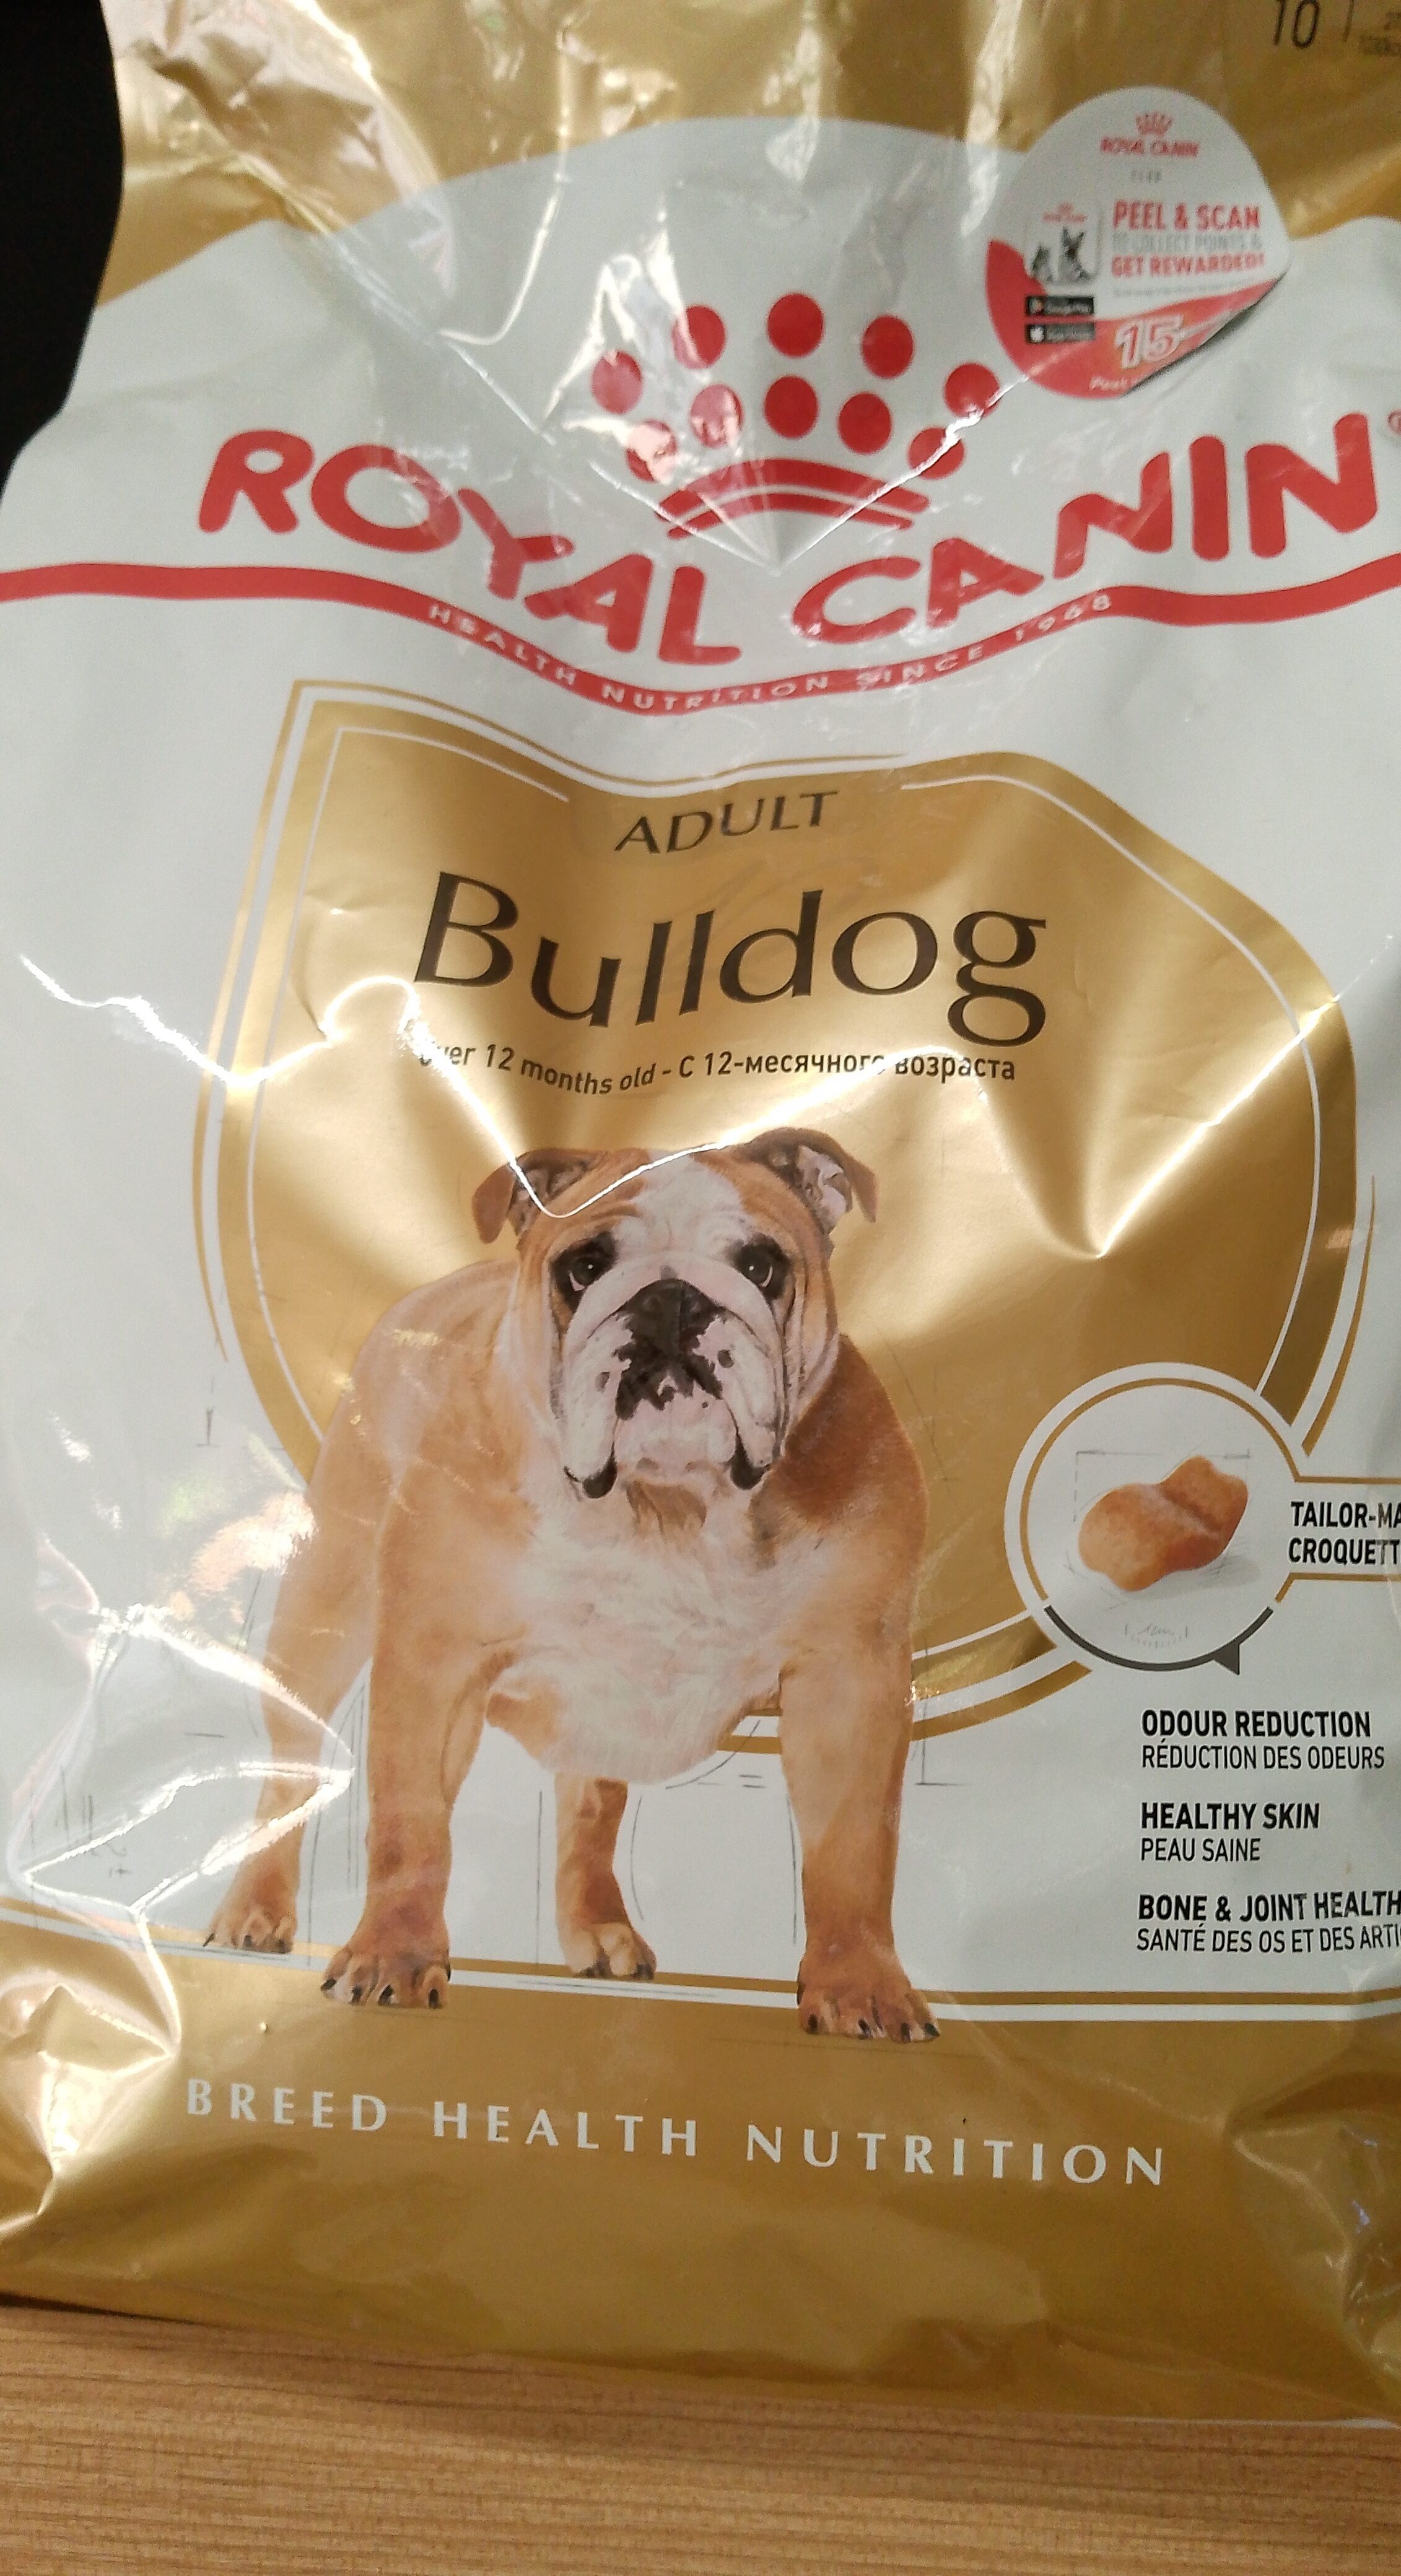 Adult bulldog - Product - en